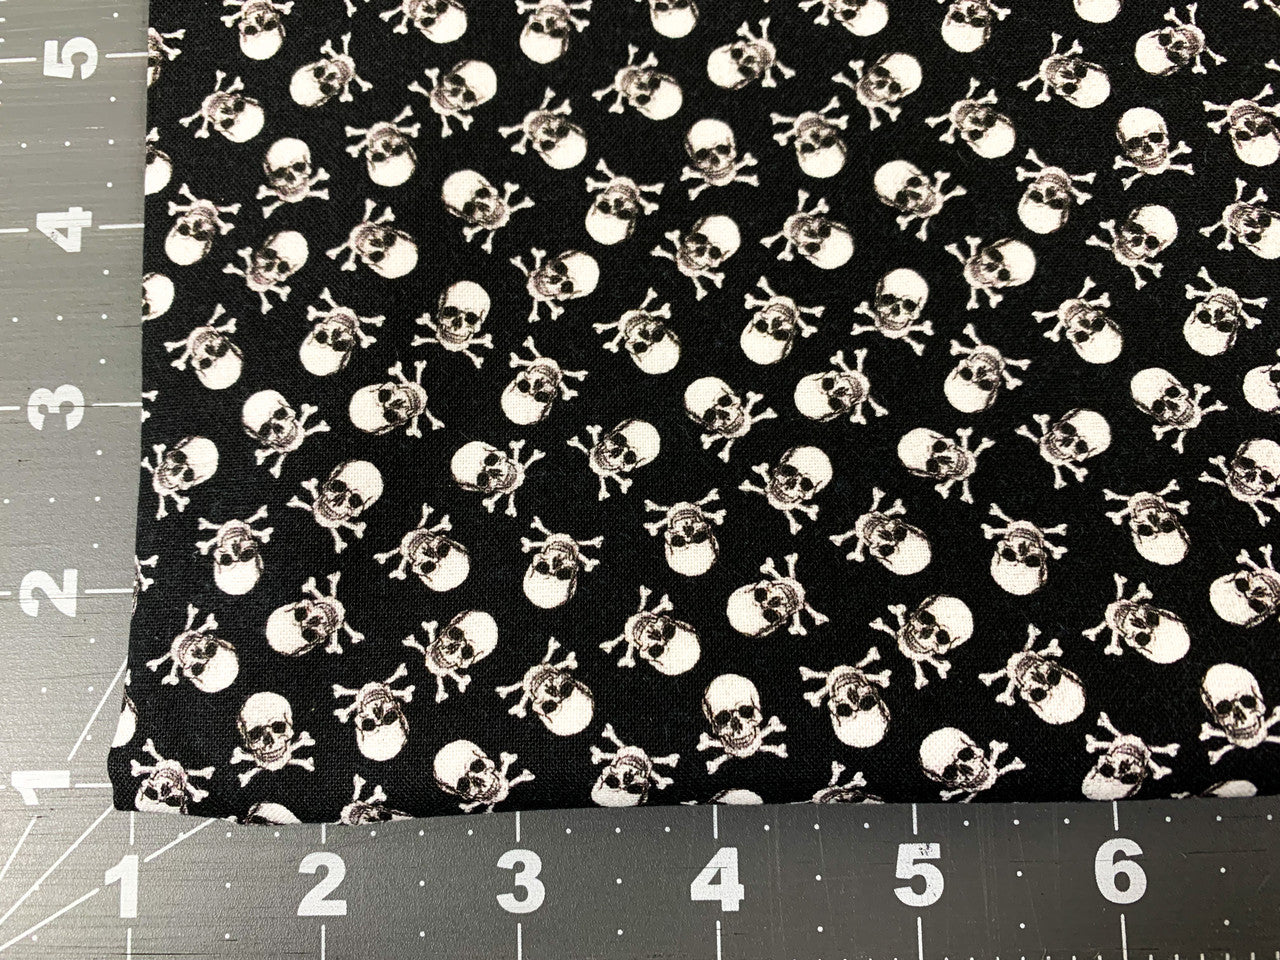 Mini Skulls and Bones fabric CD8902 Jolly Roger Skull fabric